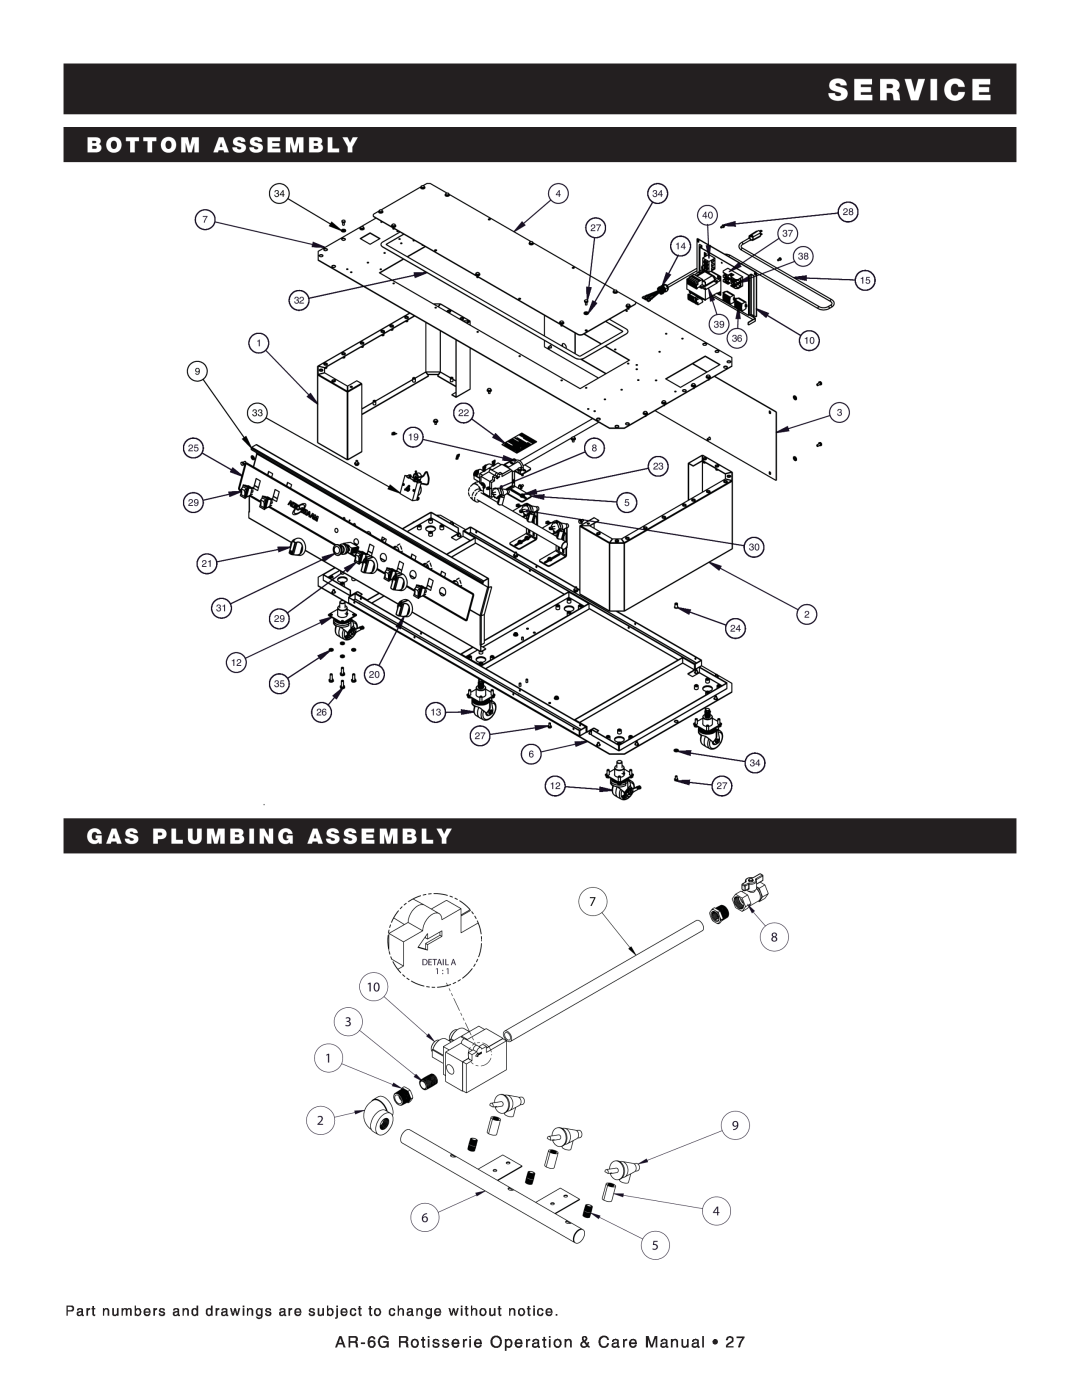 Alto-Shaam manual Bottom Assembly, gas plumbing assembly, s e rv ic e, AR-6GRotisserie Operation & Care Manual •, 10 3 1 